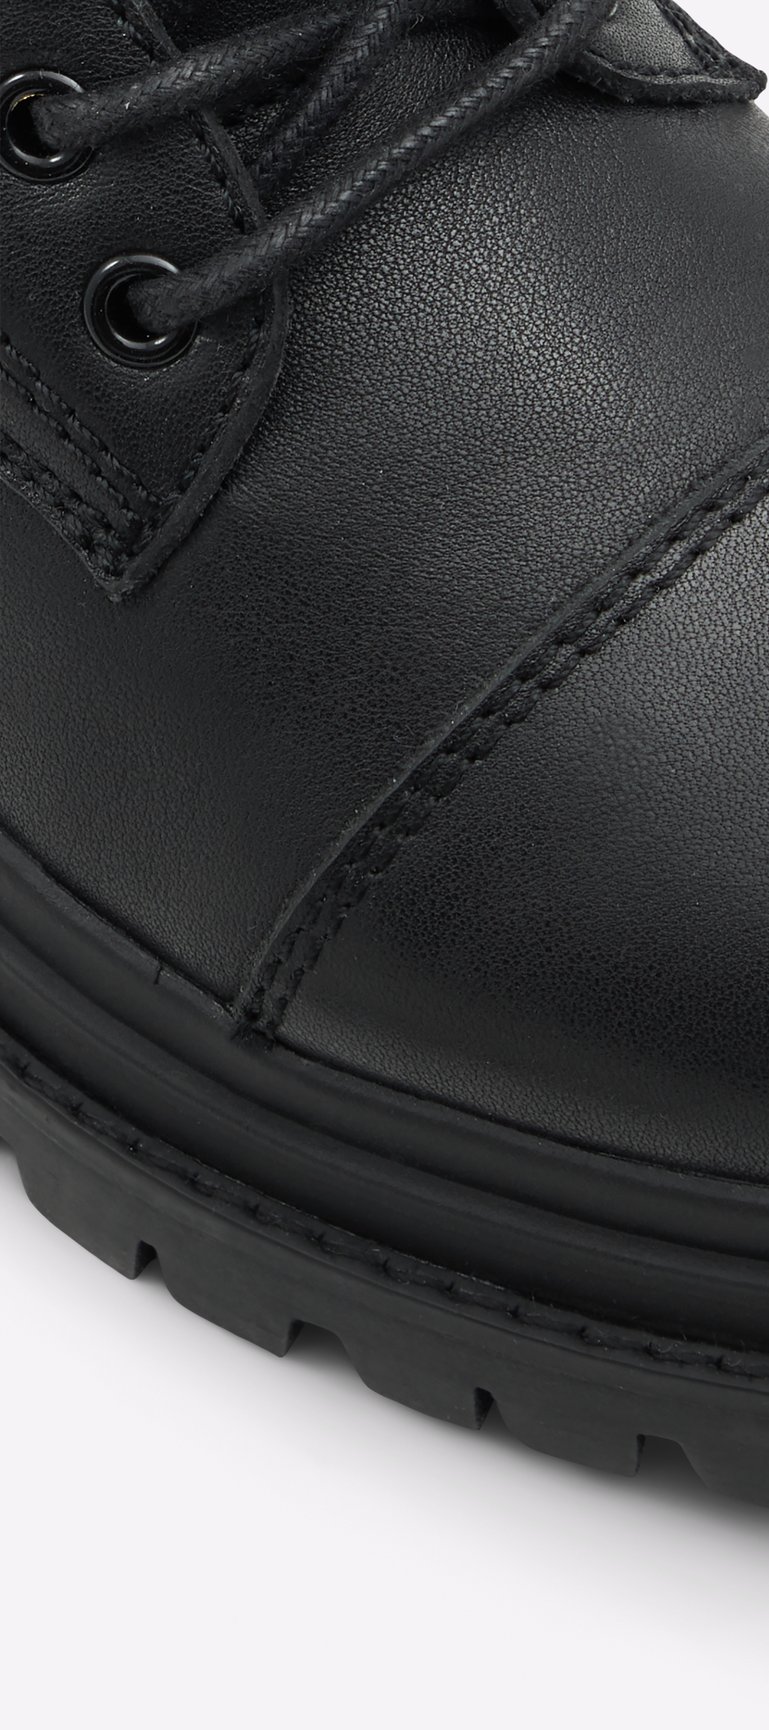 Bigmark Black Leather Smooth Women's Combat Boots | ALDO Canada